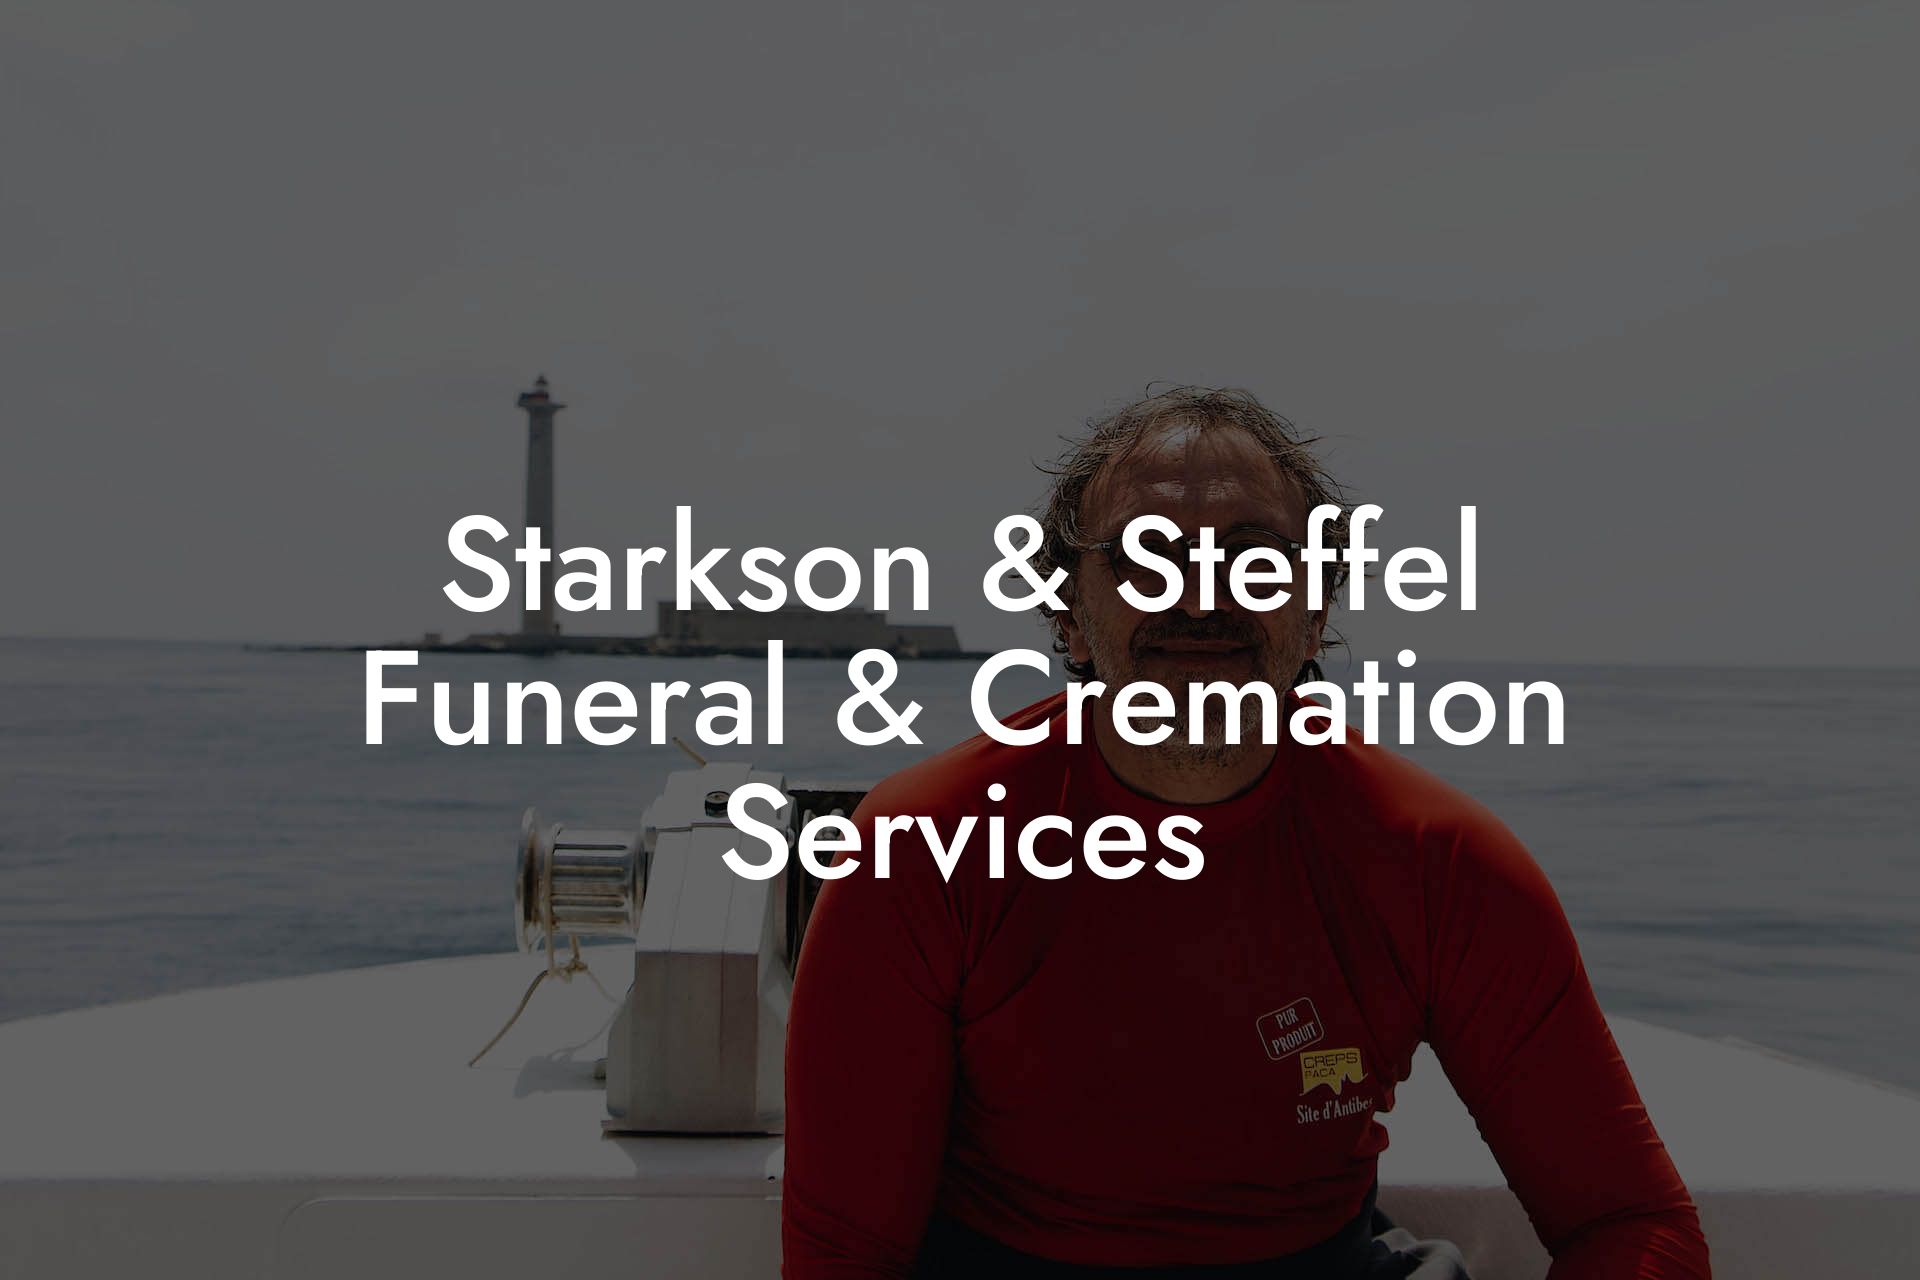 Starkson & Steffel Funeral & Cremation Services